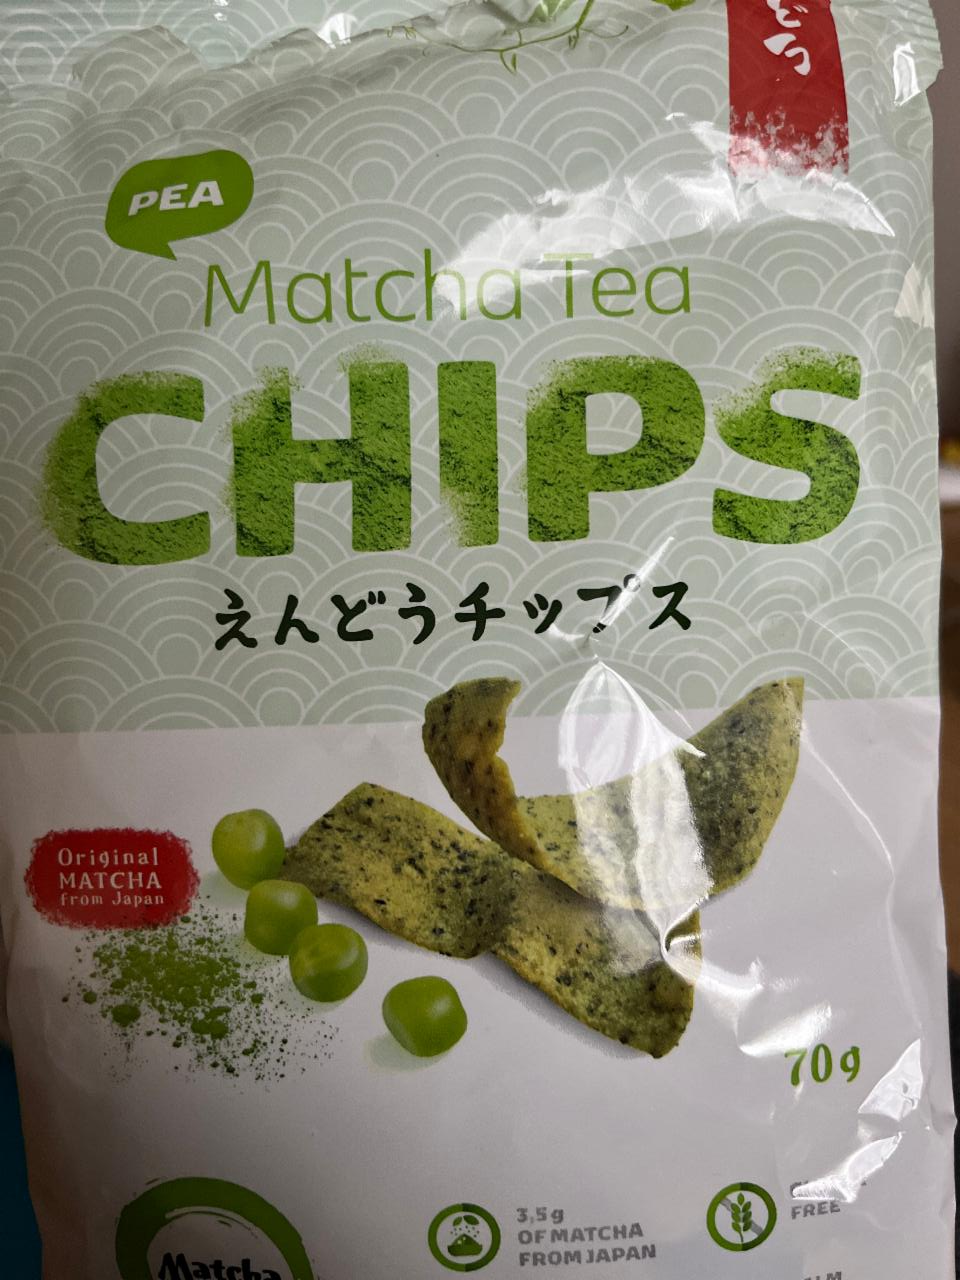 Fotografie - Matcha Tea Chips pea